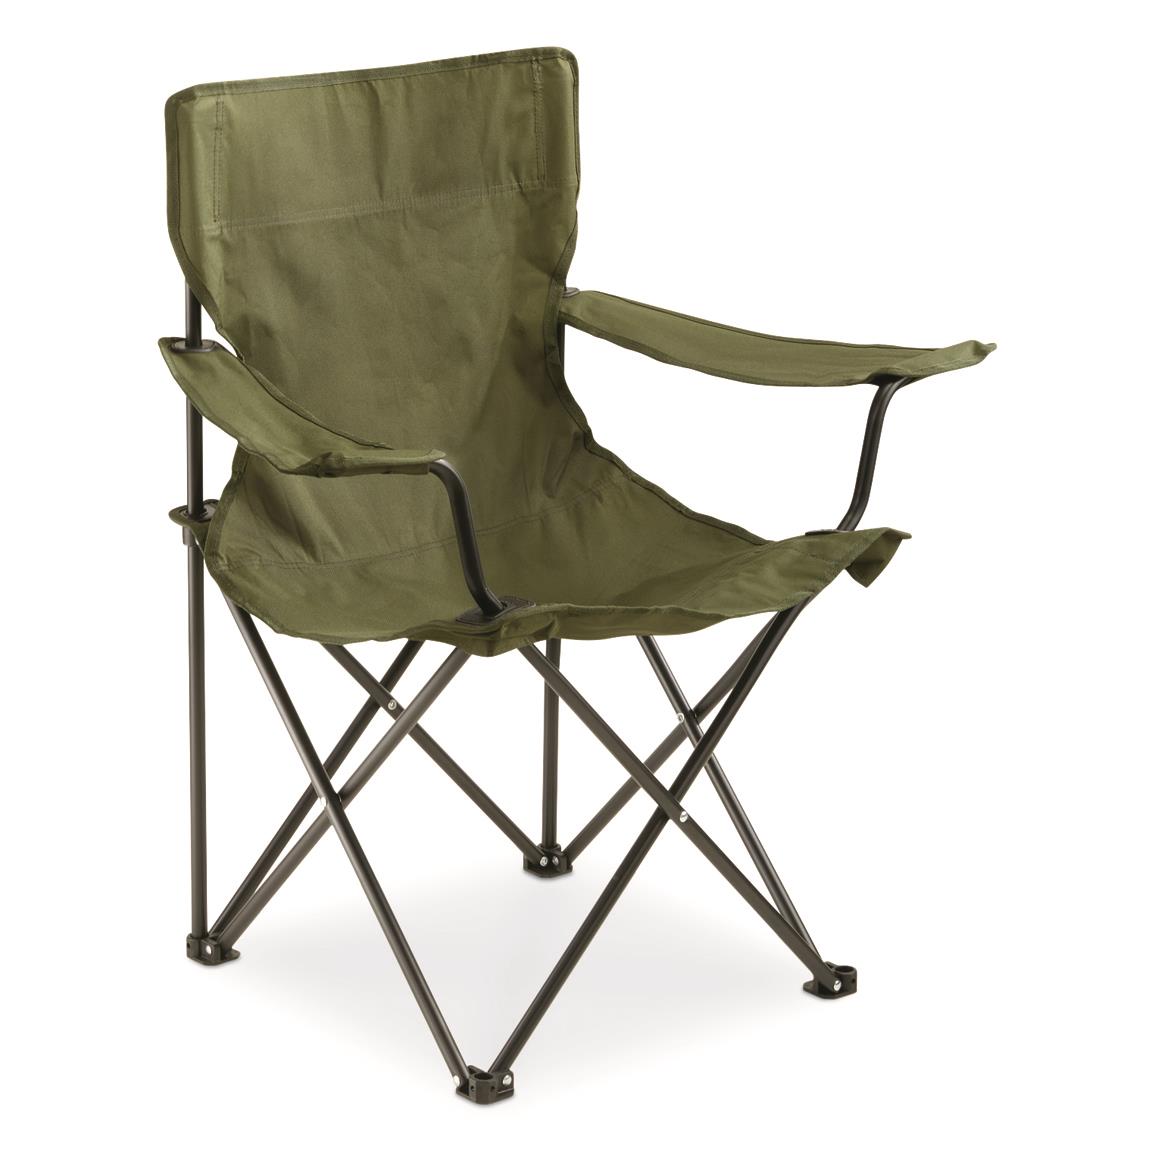 British Military Surplus Nylon Canvas Folding Chair, New, Olive Drab